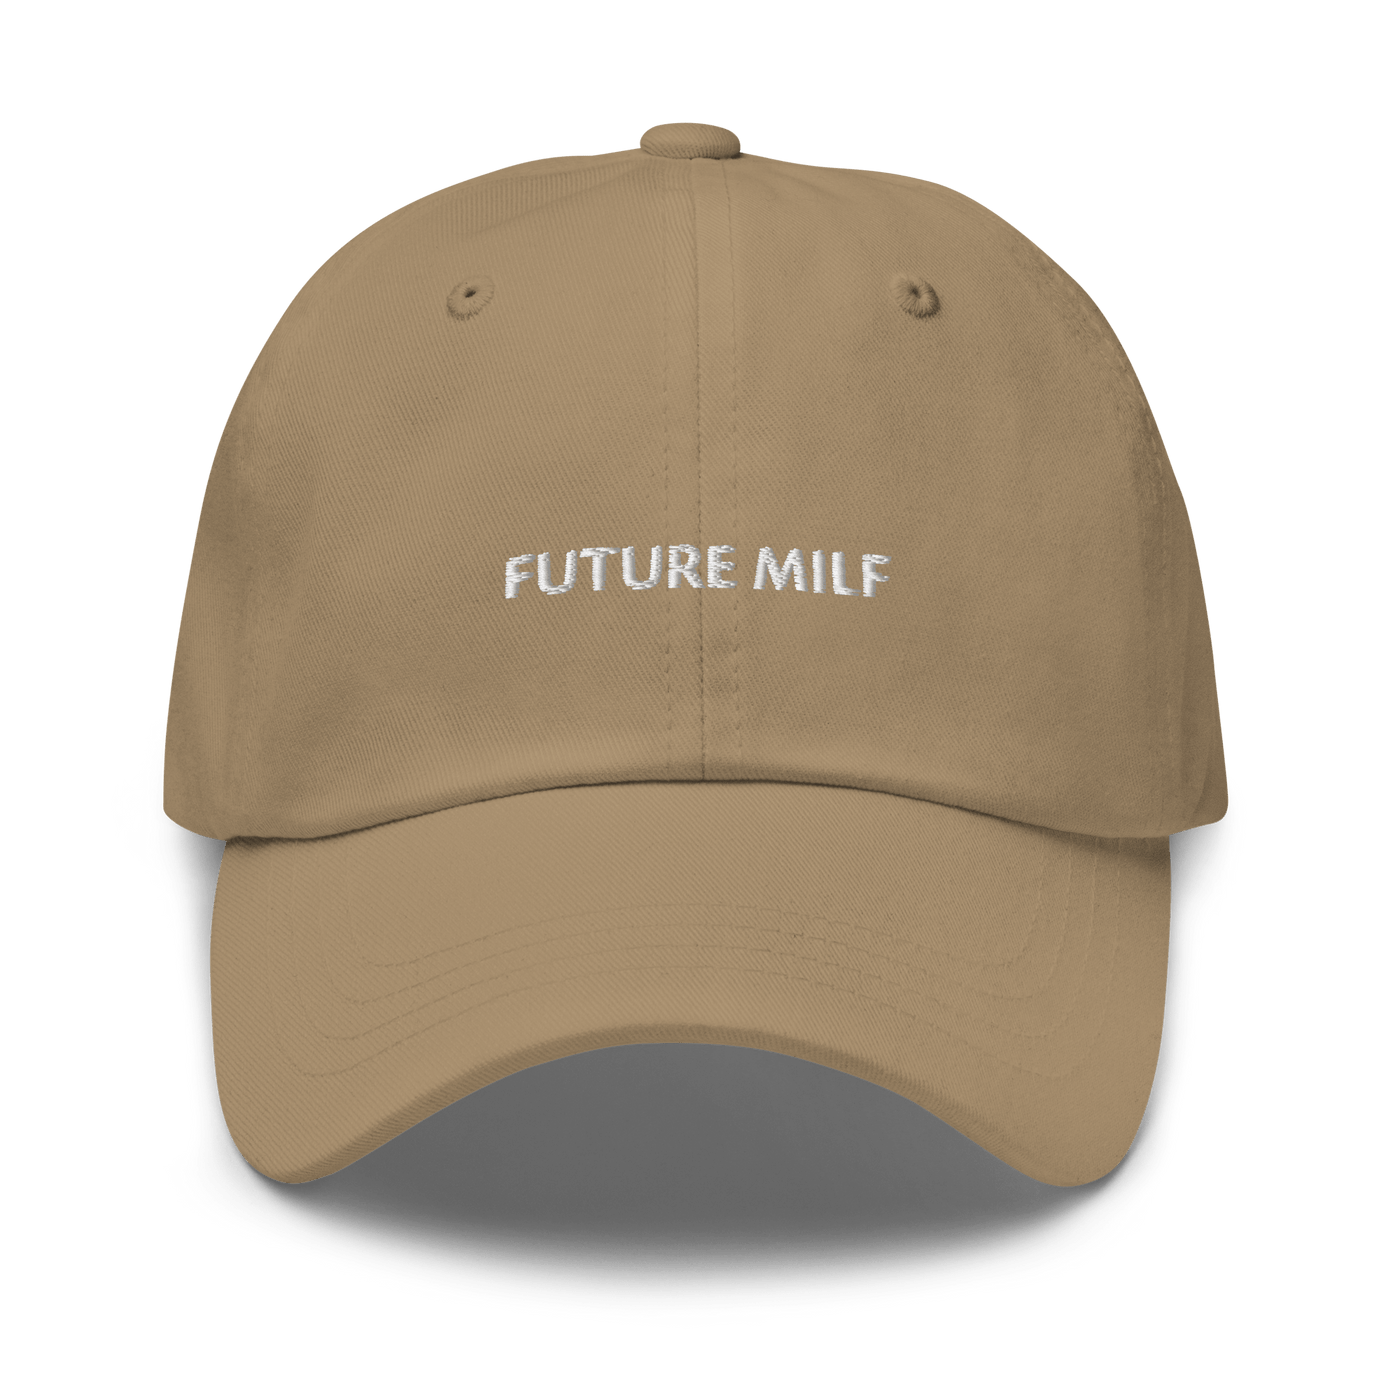 Future Milf Dad hat - Khaki - - Just Another Cap Store